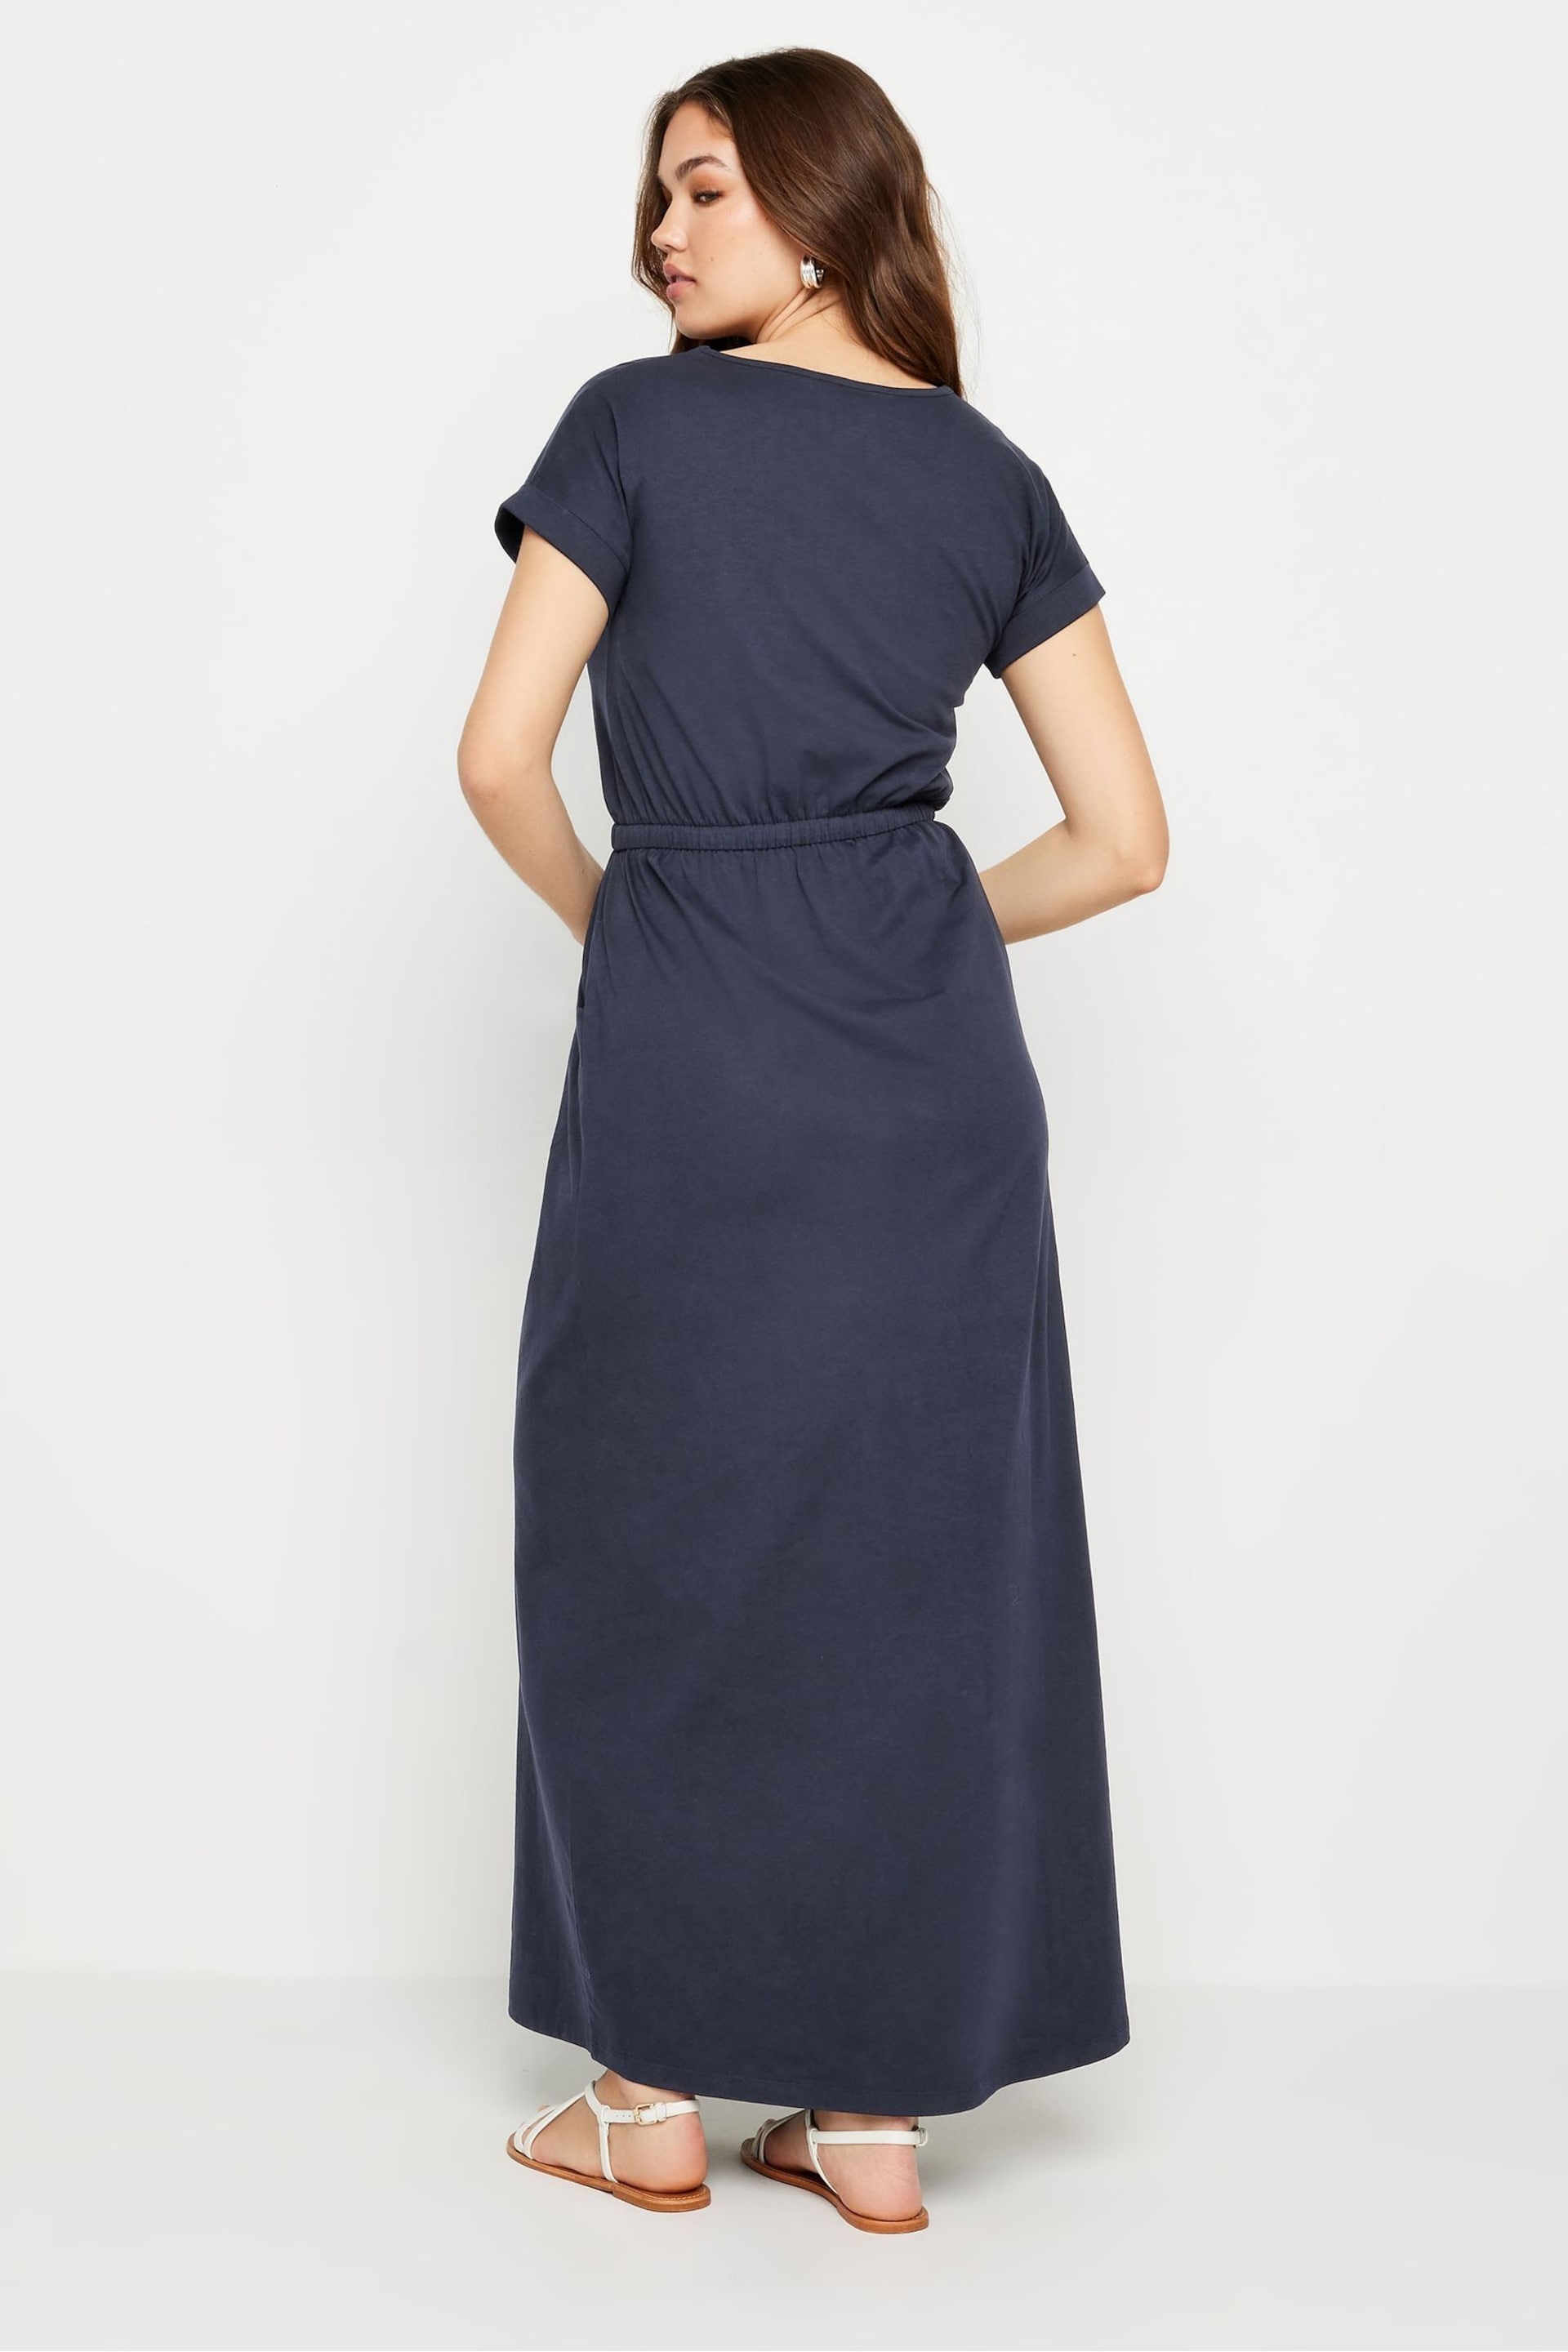 Long Tall Sally Blue Maxi T-Shirt Dress - Image 3 of 5